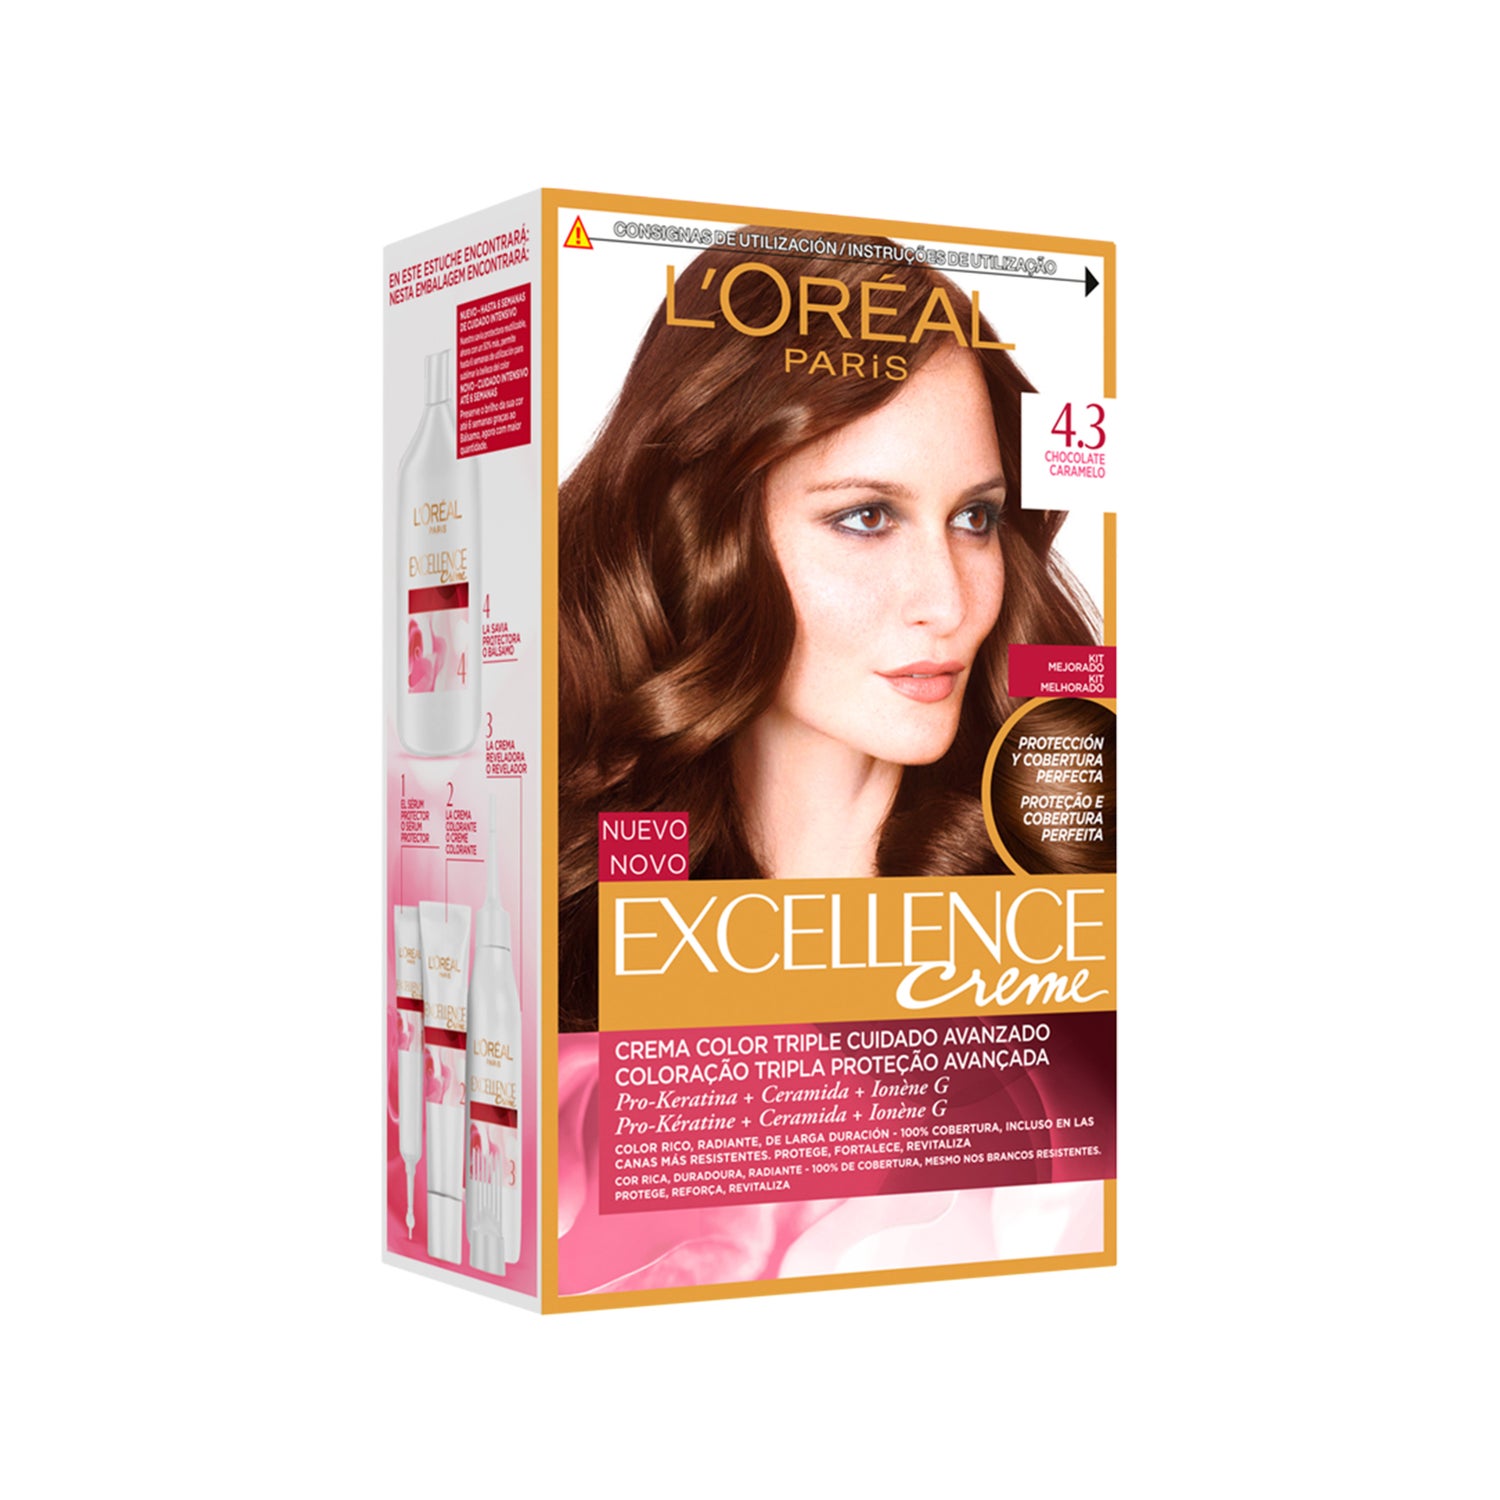 L'Oreal Set Excellence Creme Hair Colour 43 Chocolate Caramel | PromoFarma